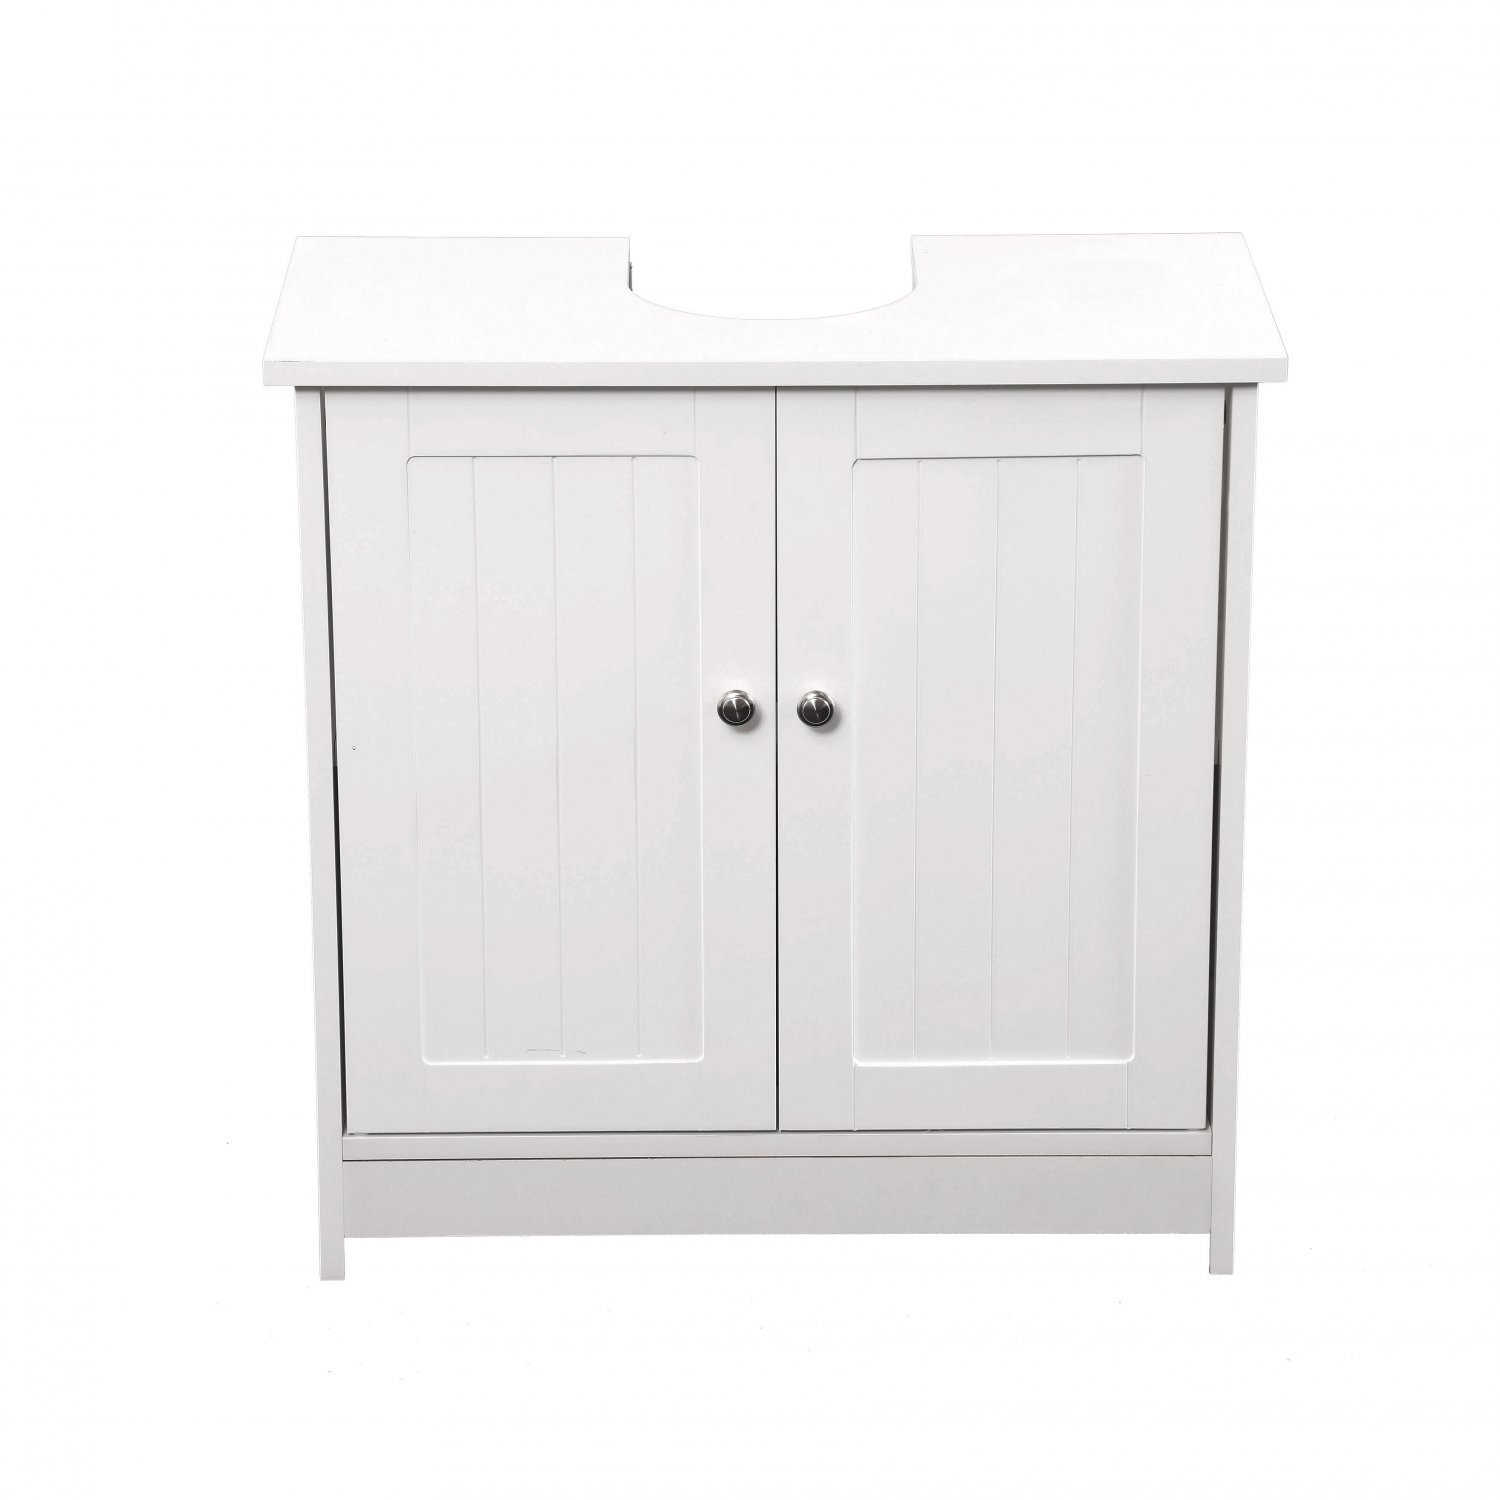 SoBuy® FRG237-W White Under Sink Bathroom Storage Cabinet with Double Shutter Doors 60x35x58cm 